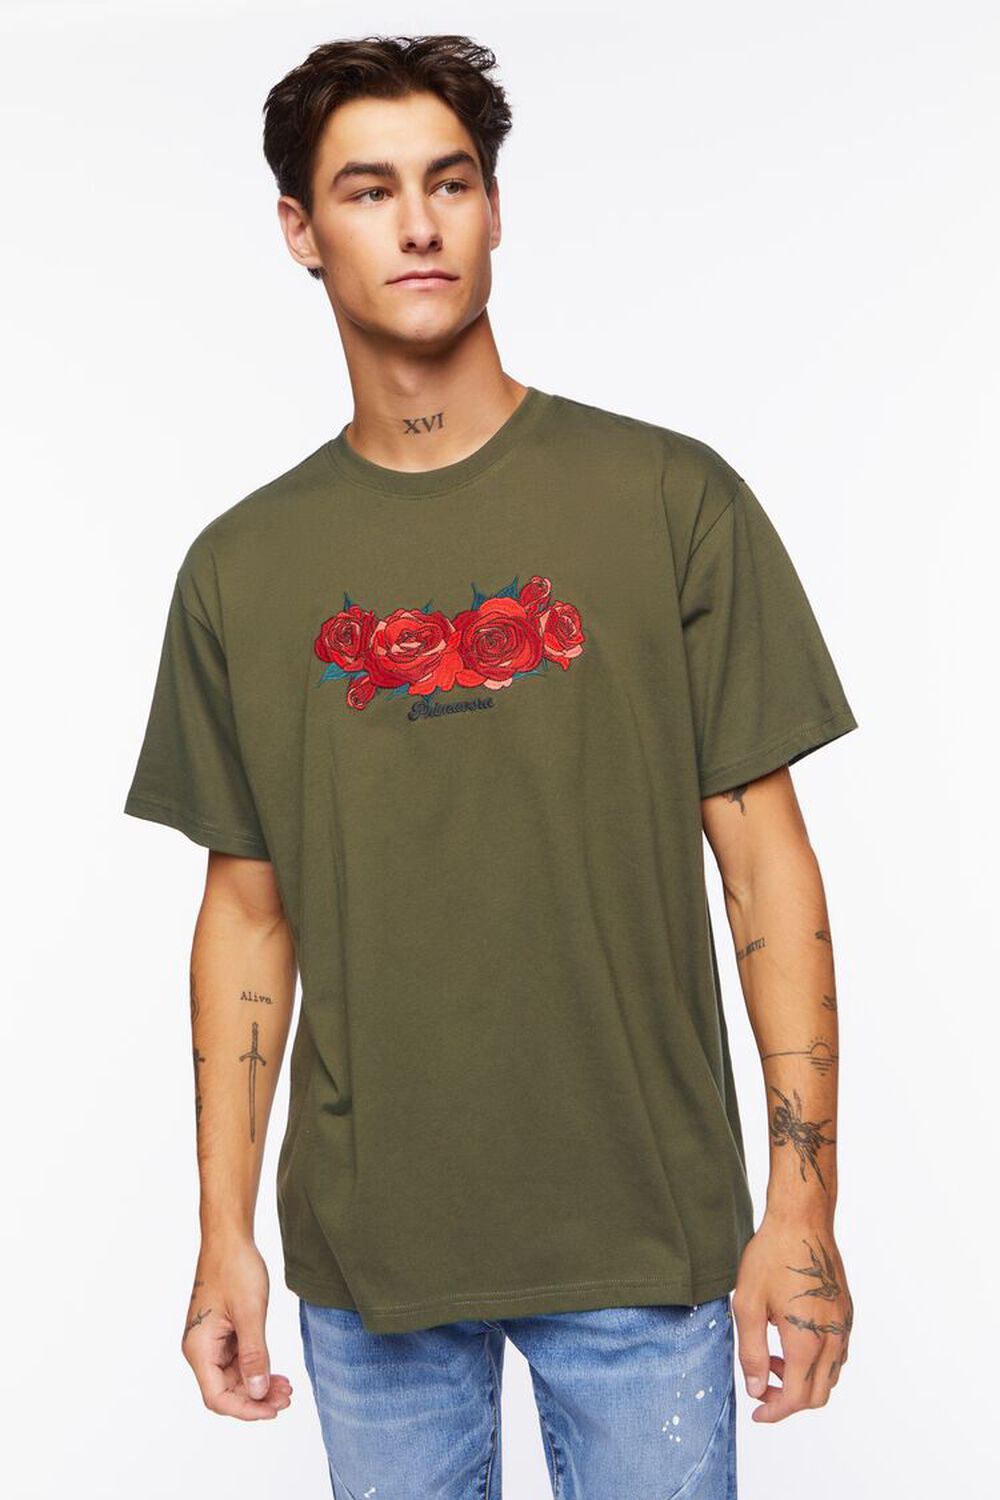 Grucci Merchandise Essential T-Shirt - REVER LAVIE